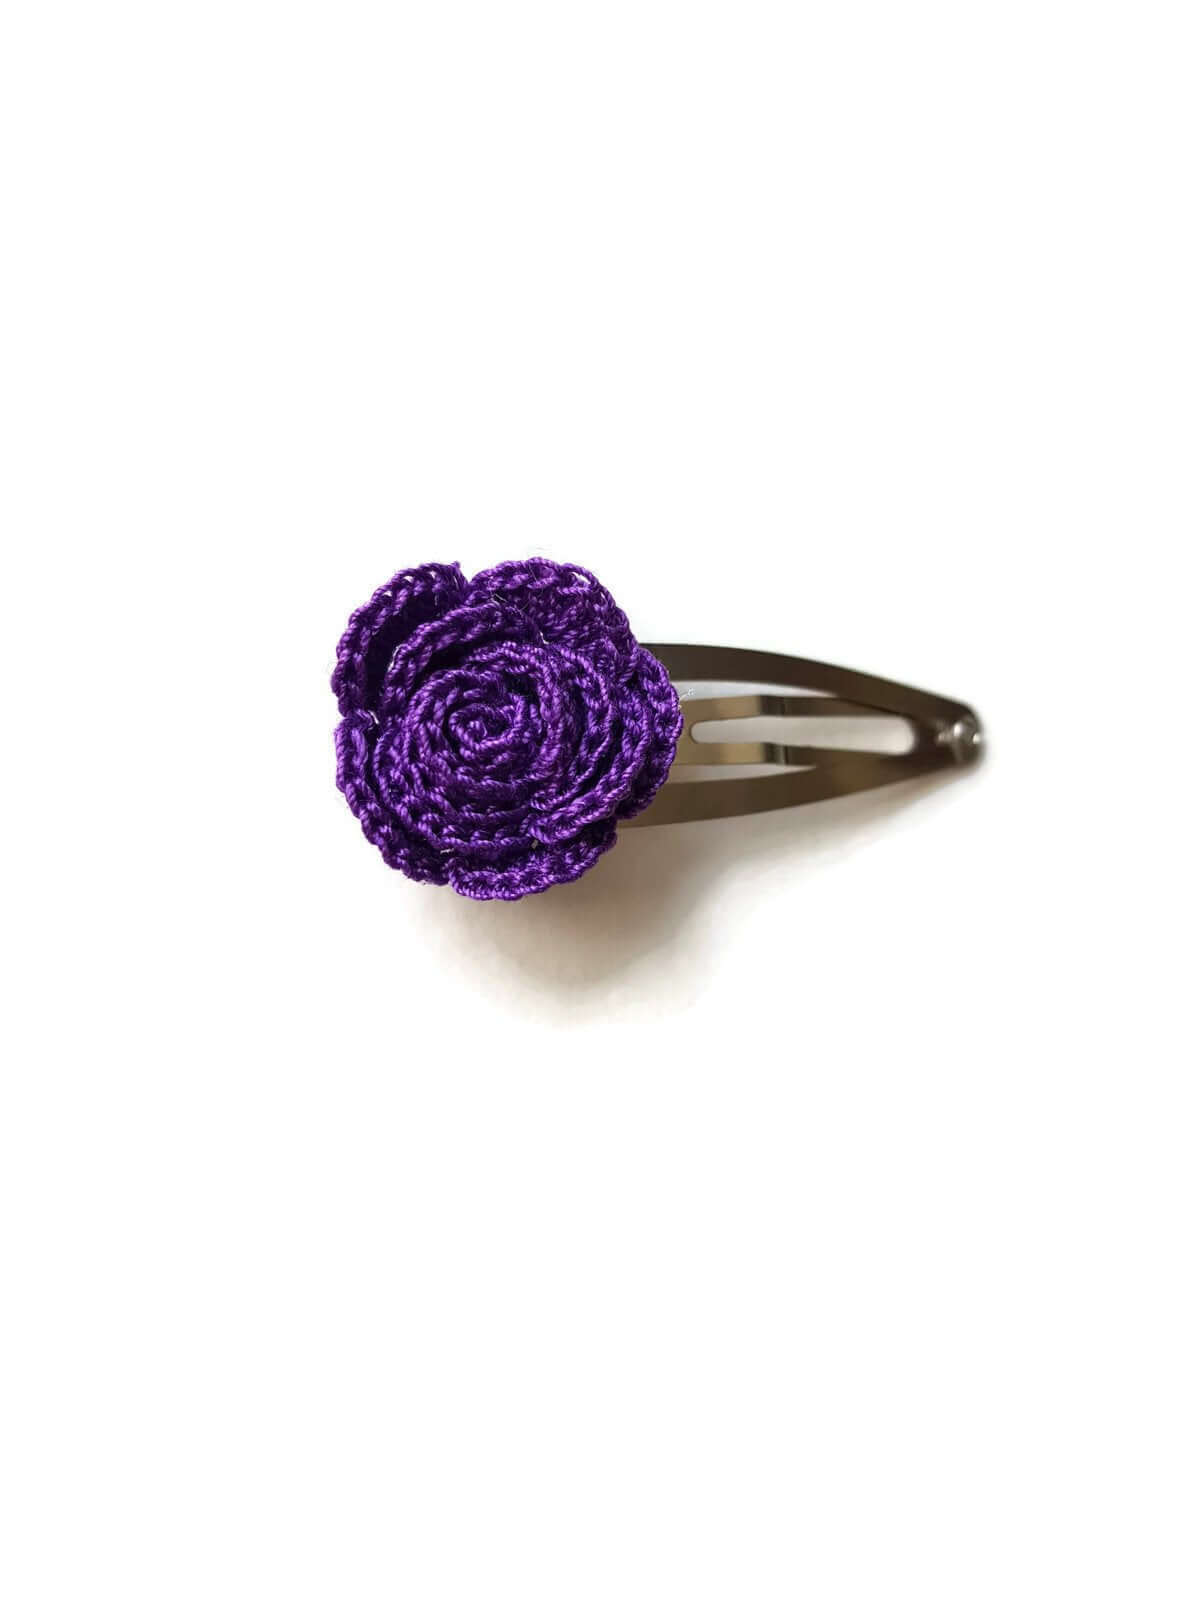 Purple hair clip rose handmade crochet flower pin accessory